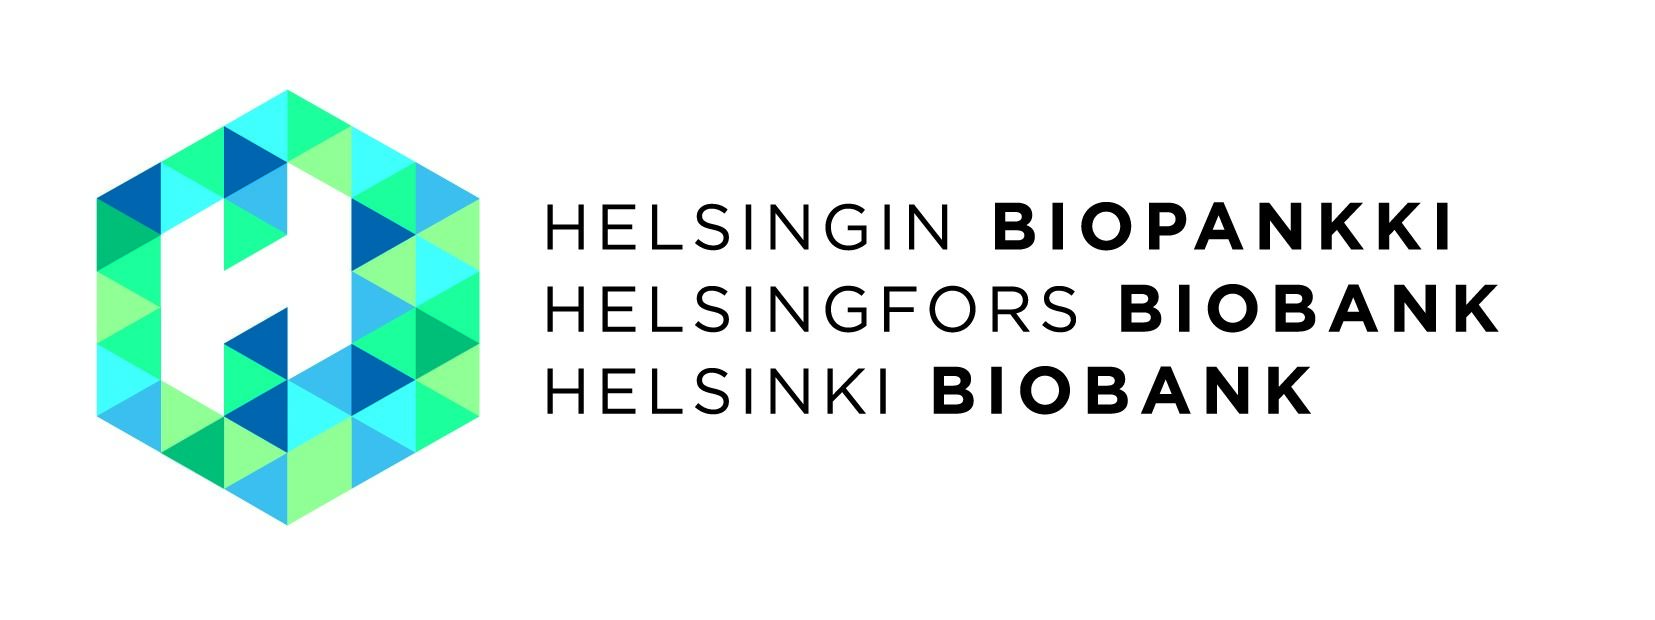 Helsingfors biobanks logo 